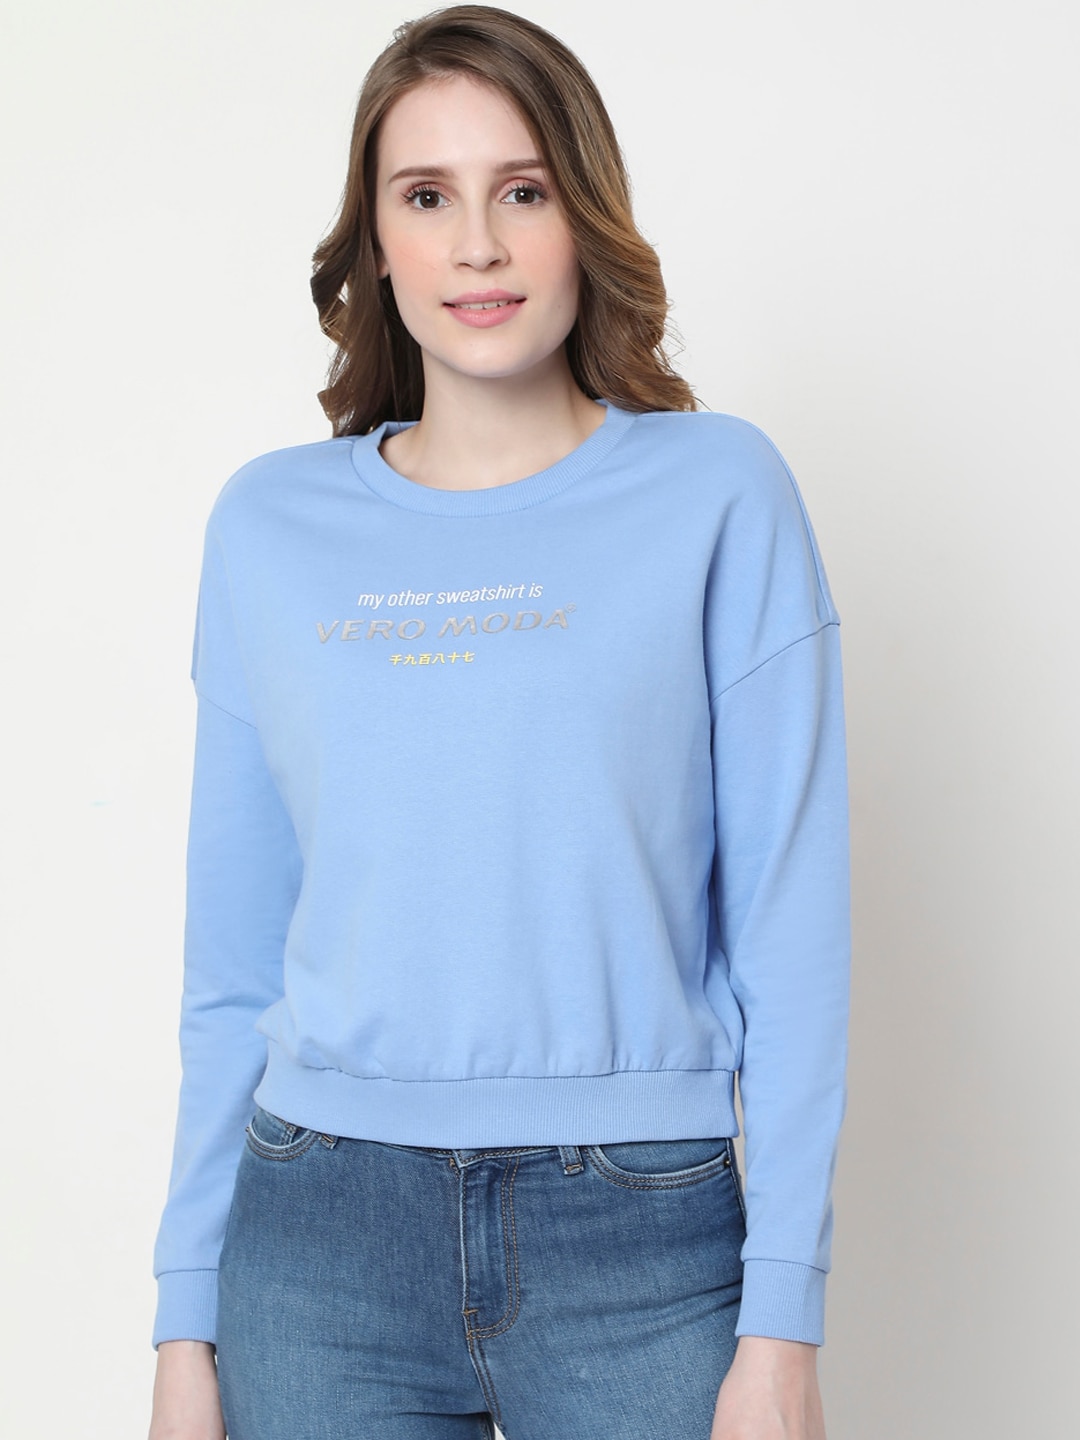 Vero Moda Women Blue Printed Sweatshirt Price in India